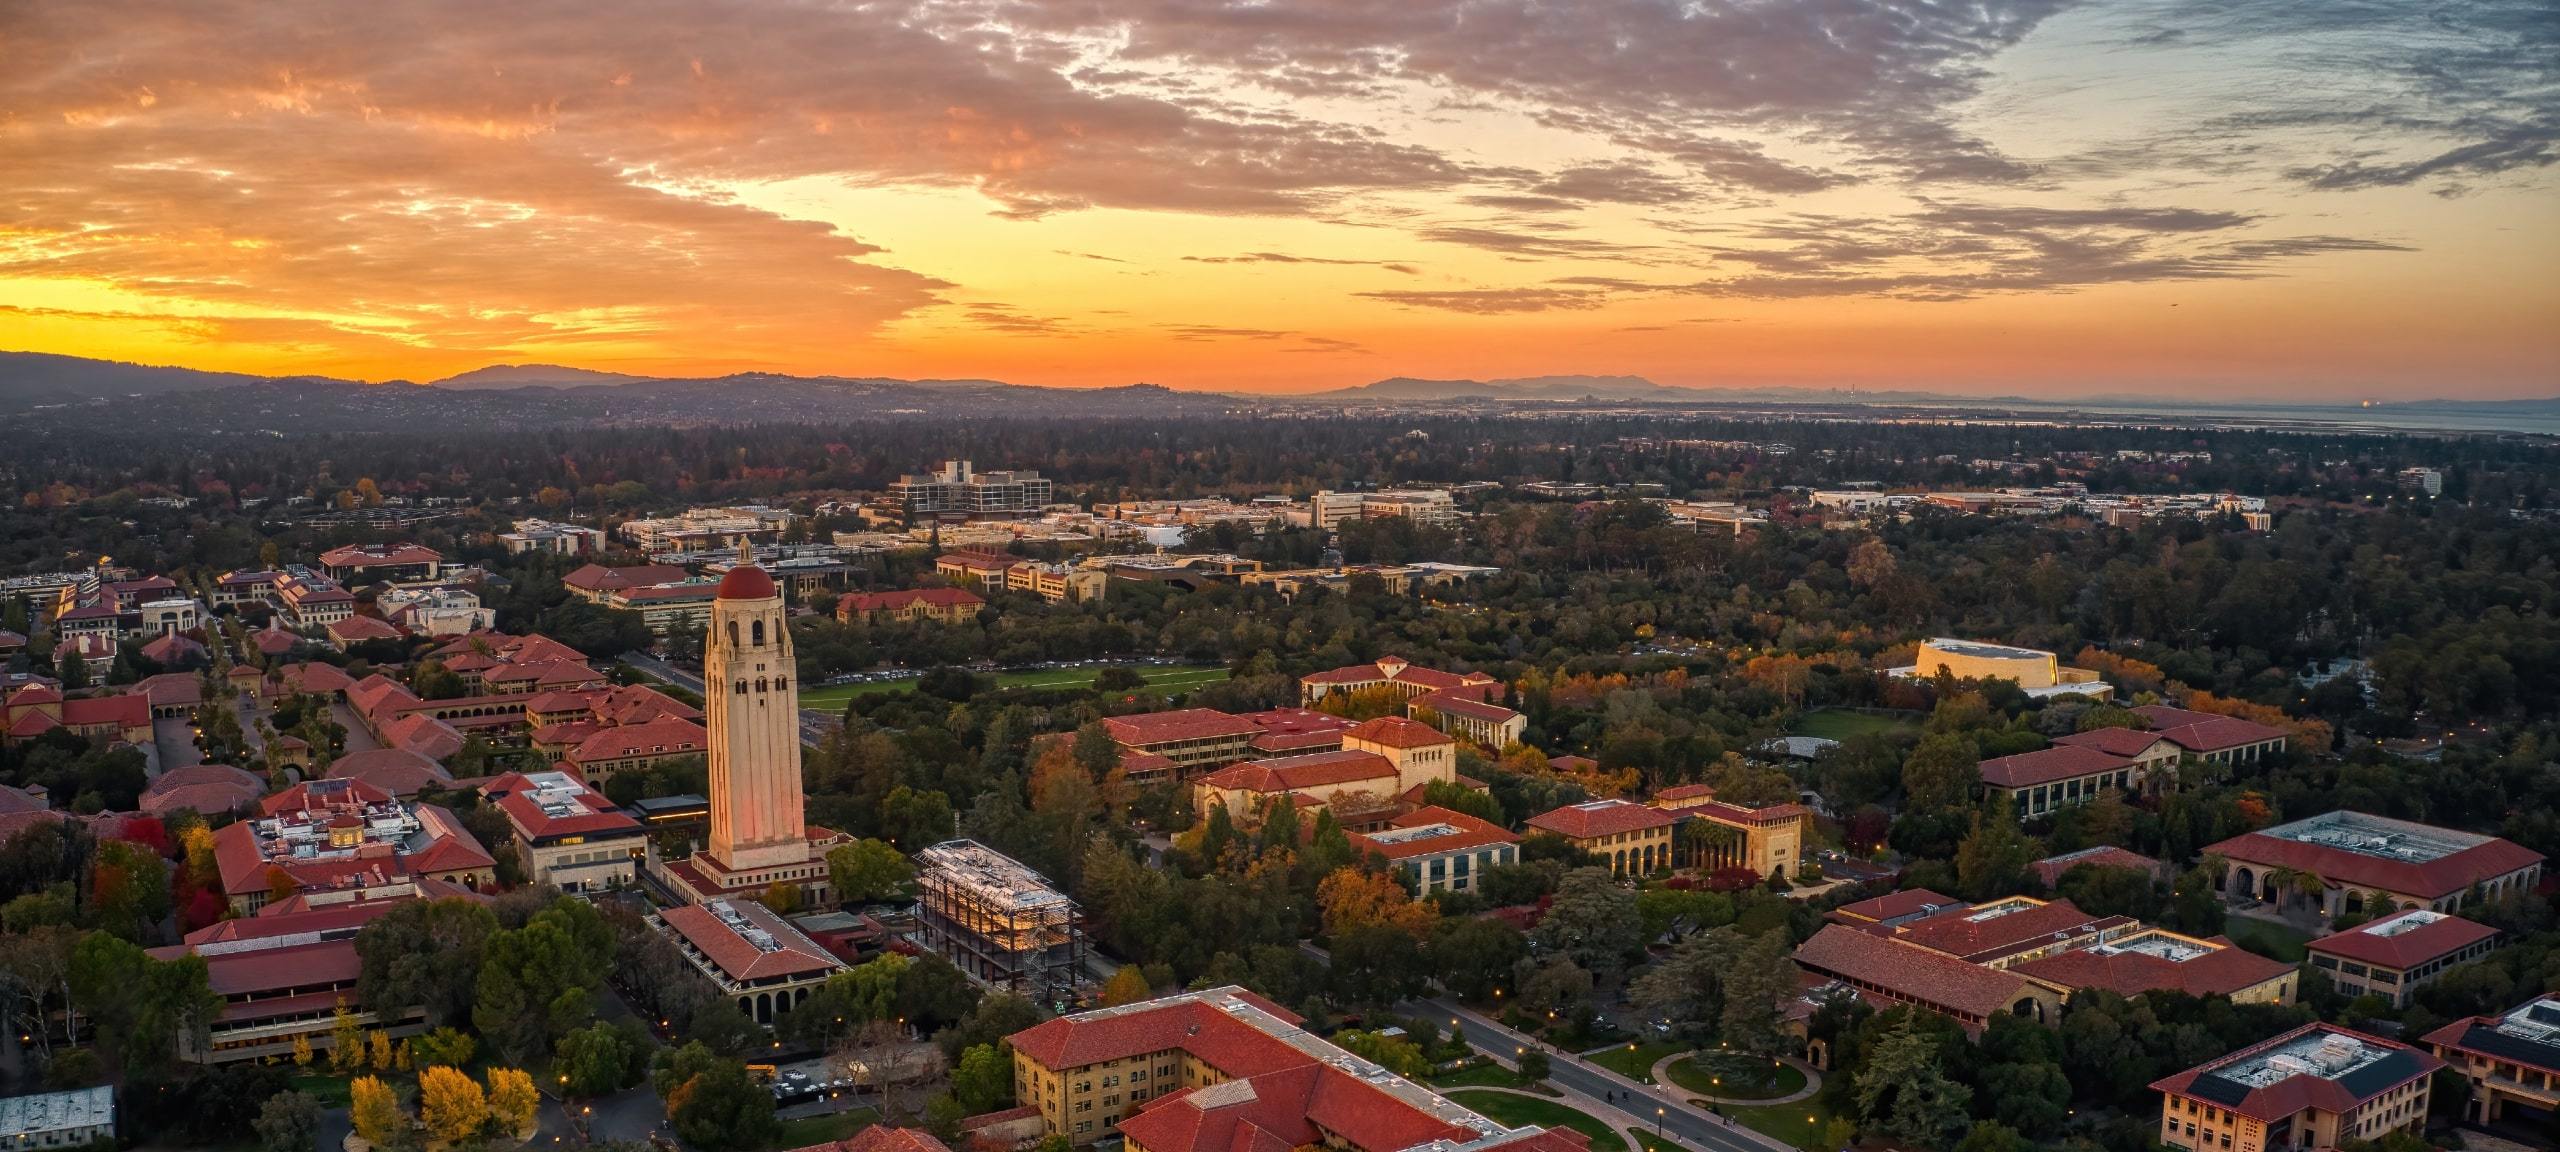 Sunset over Stanford University buildings near Palo Alto, CA